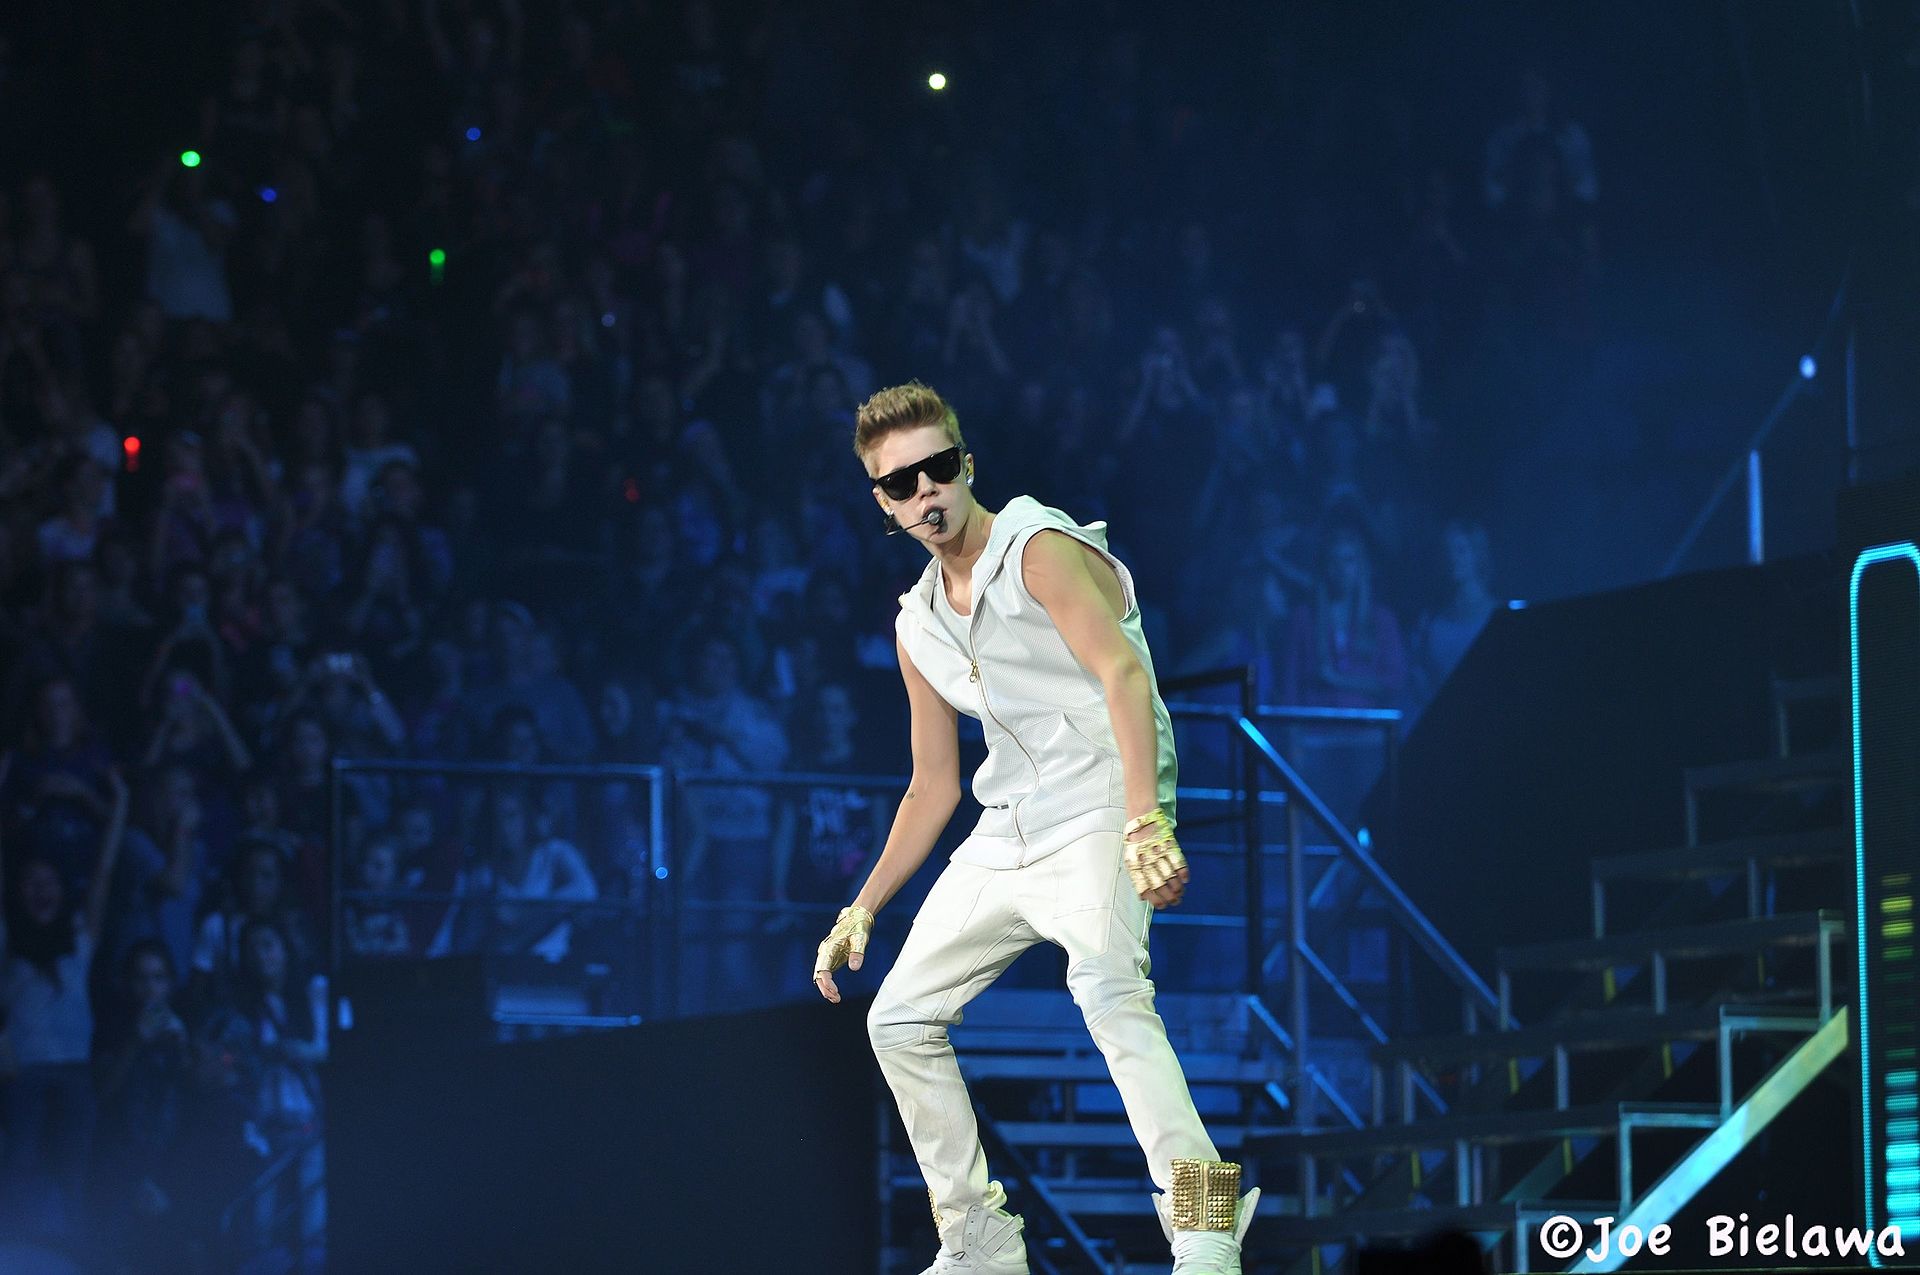 Justin Bieber performing in concert